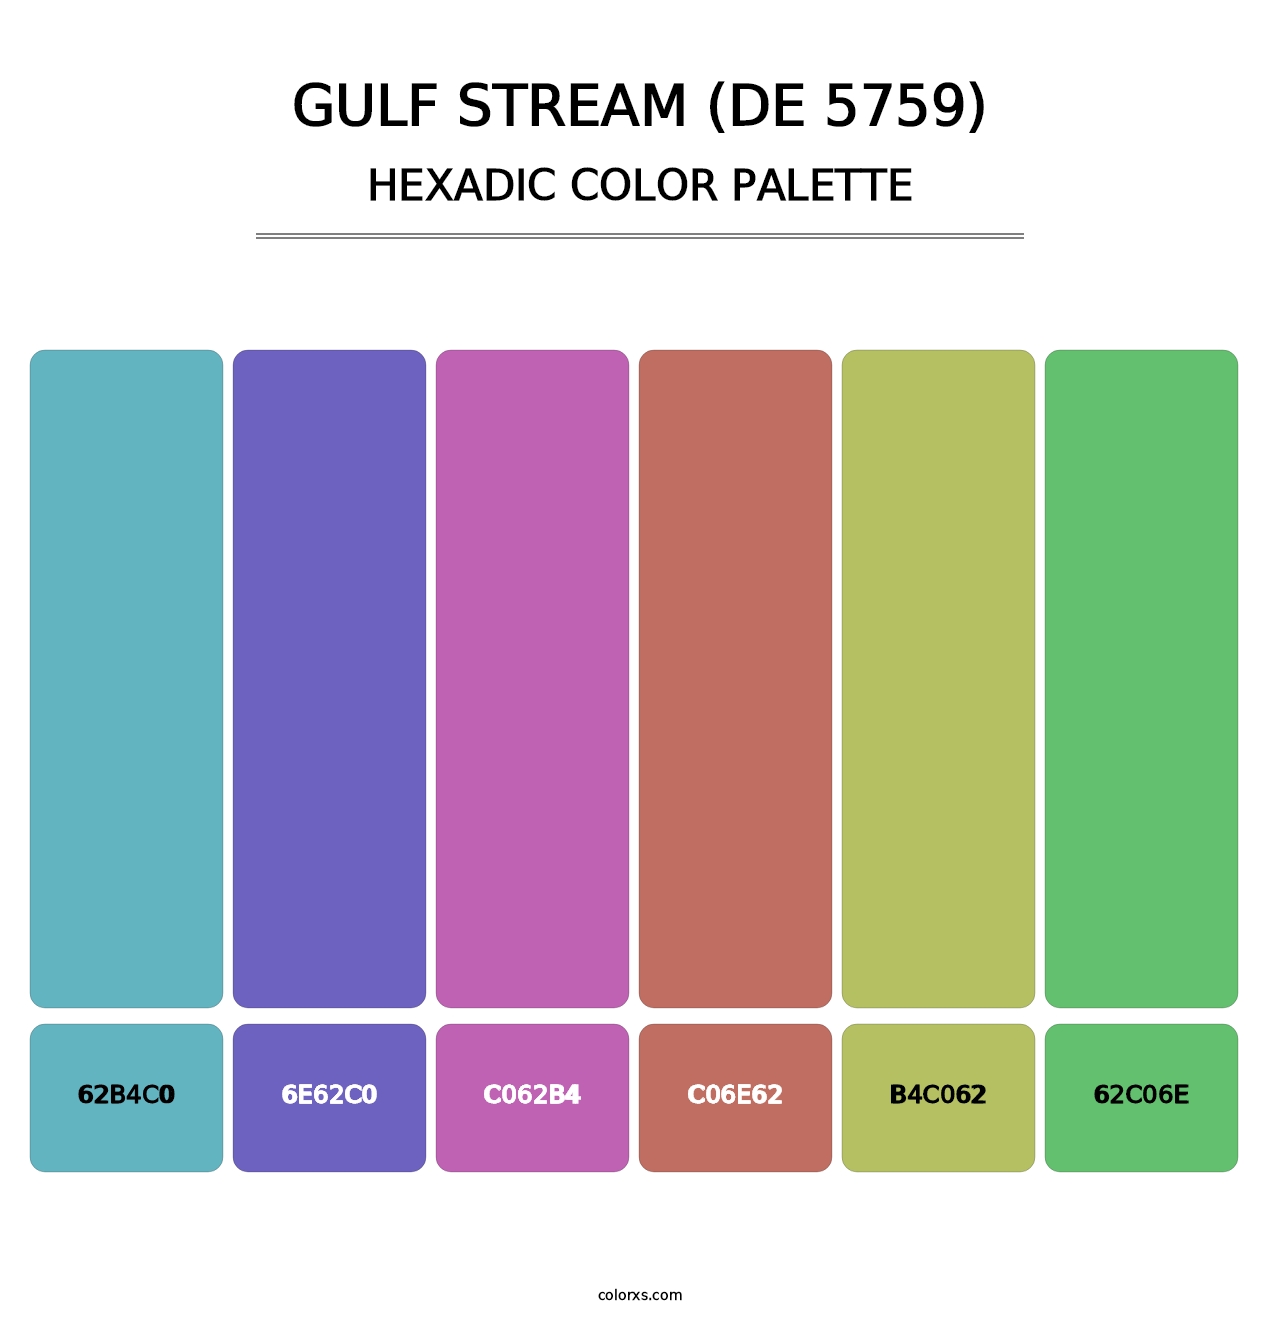 Gulf Stream (DE 5759) - Hexadic Color Palette